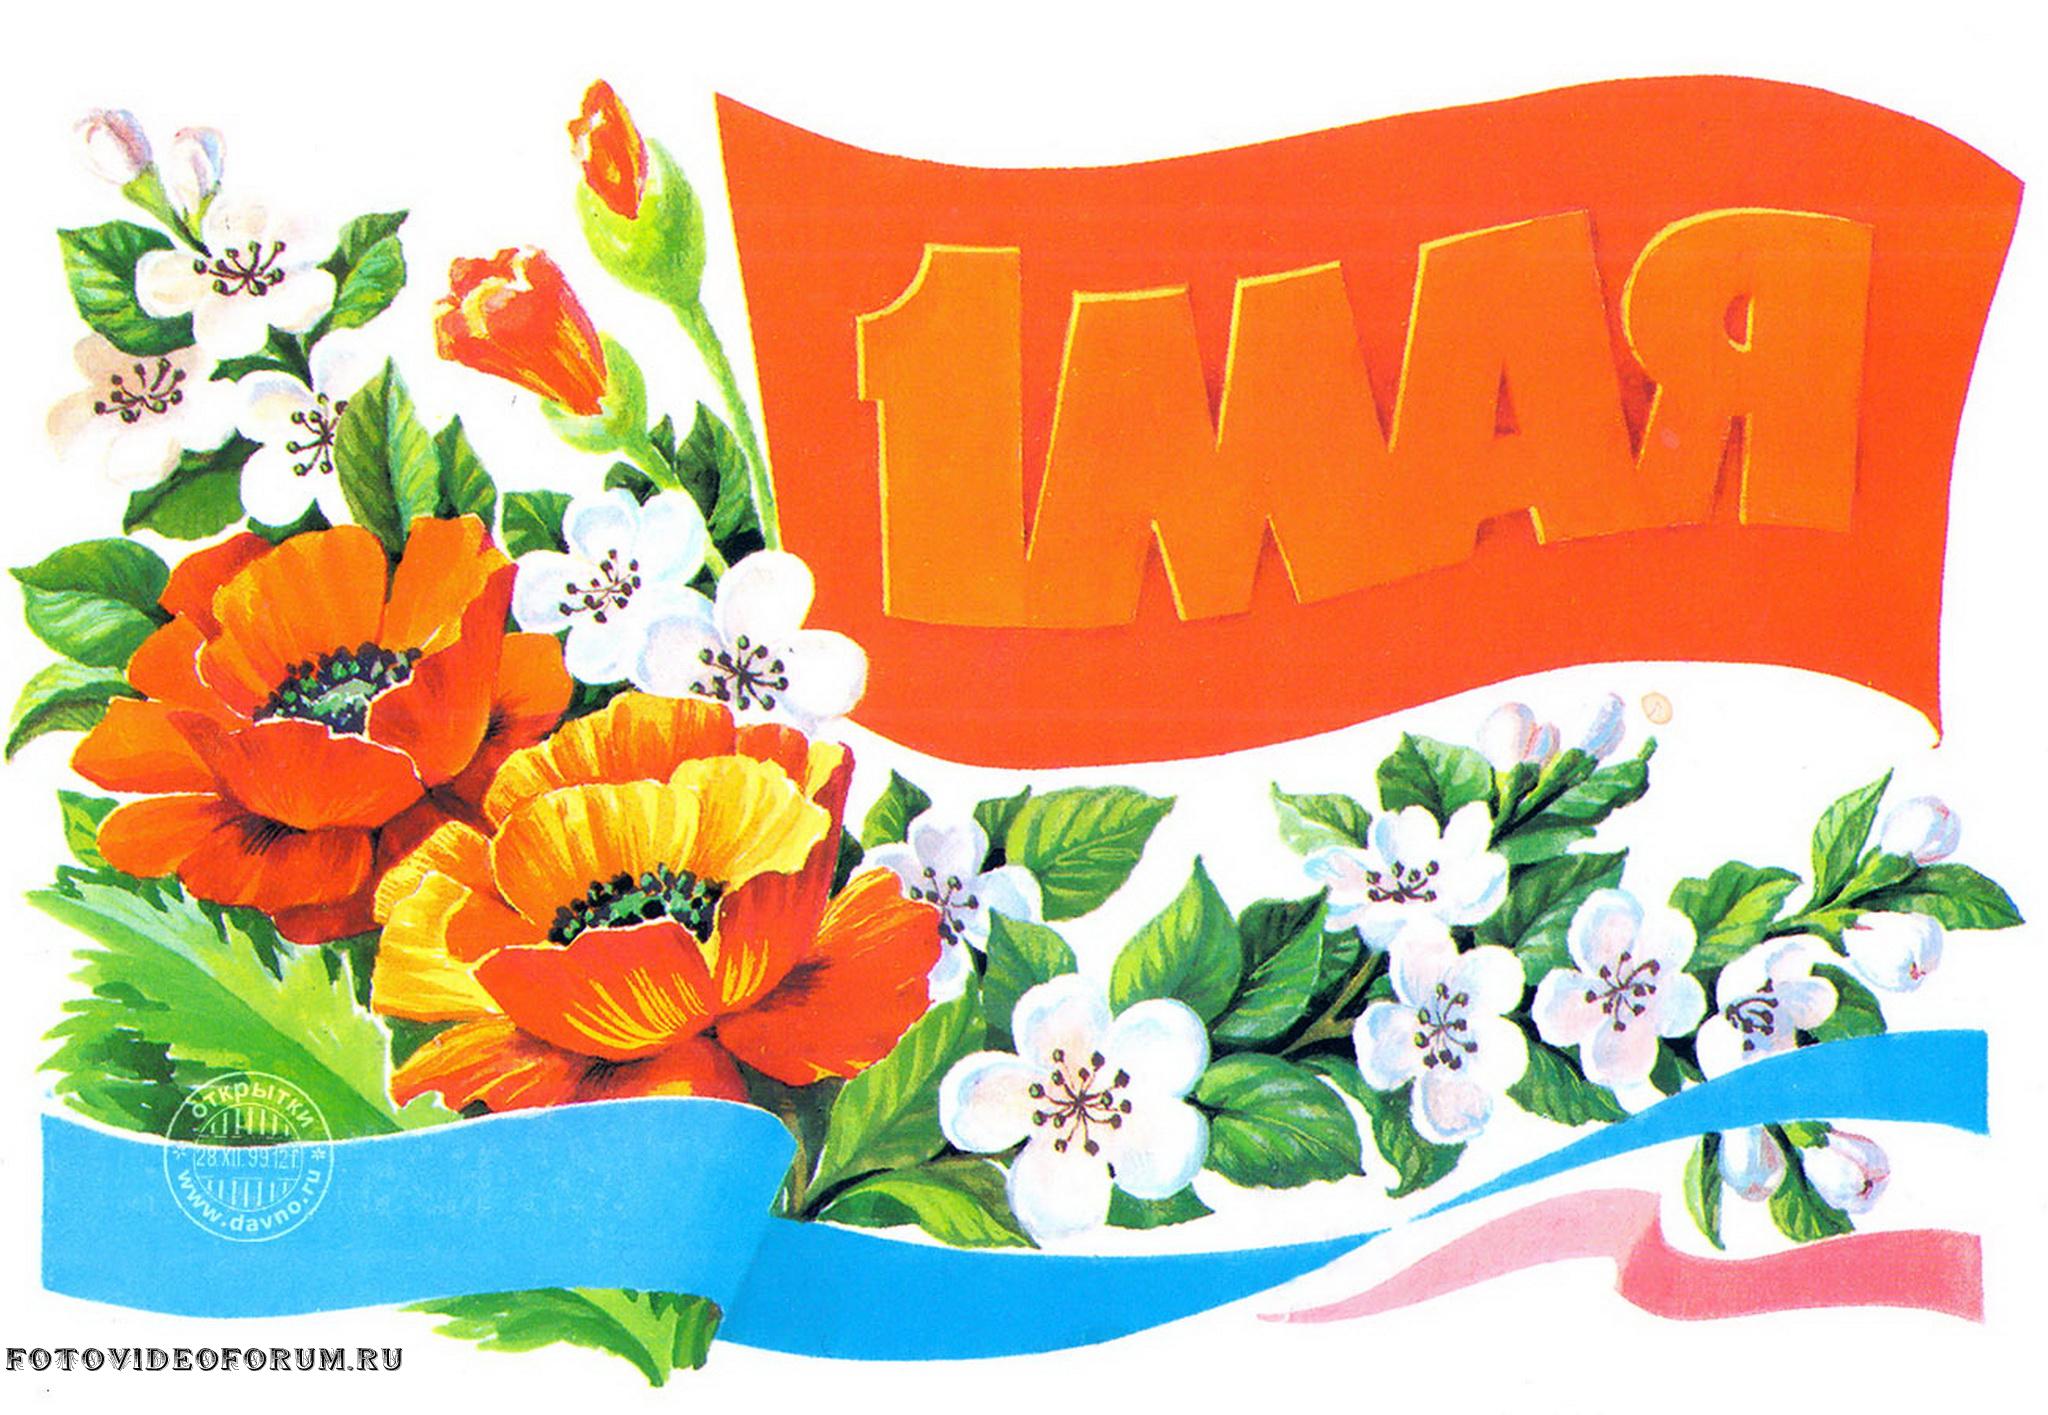 Товар на 1 мая. Советские открытки с 1 мая. 1 Мая ретро открытки. Мир труд май советские открытки. 1 Мая плакат.